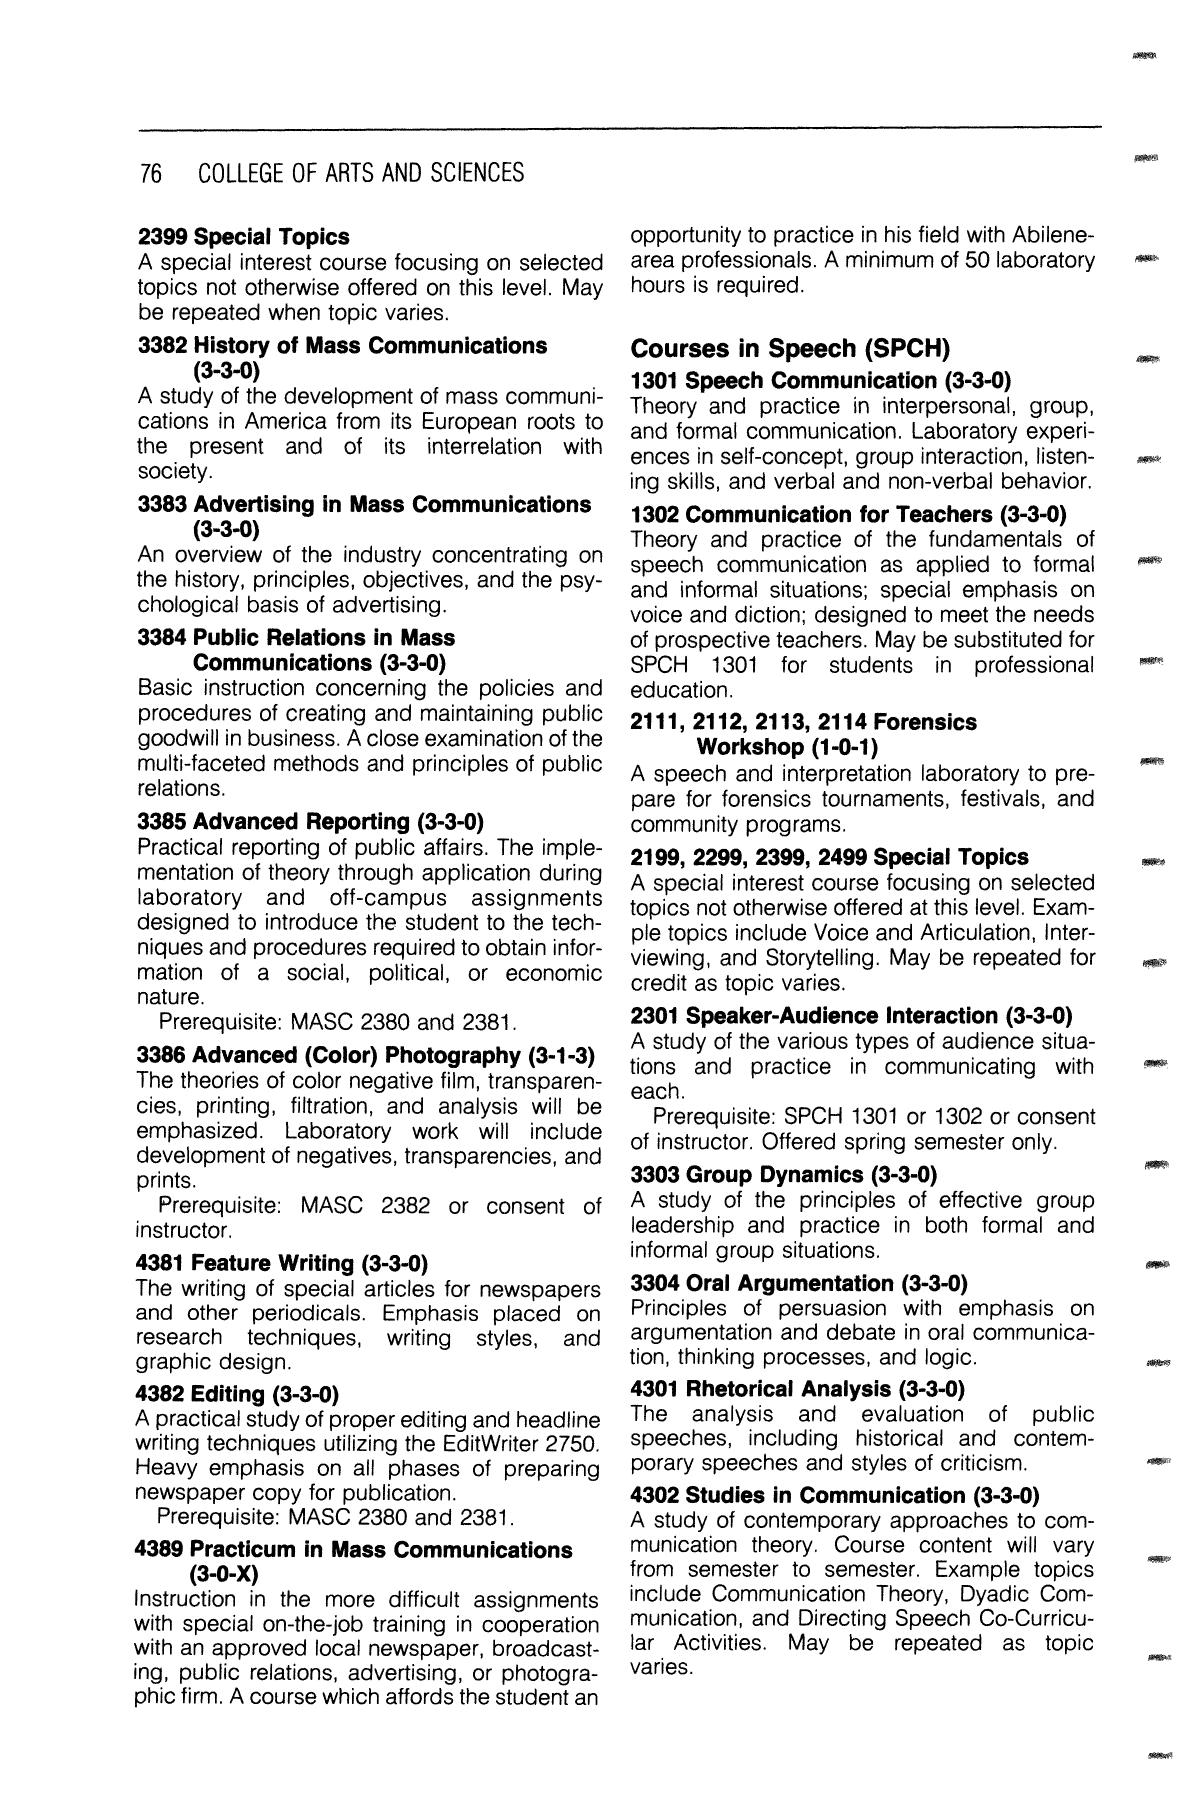 Catalog of Hardin-Simmons University, 1985-1986 Undergraduate Bulletin
                                                
                                                    76
                                                